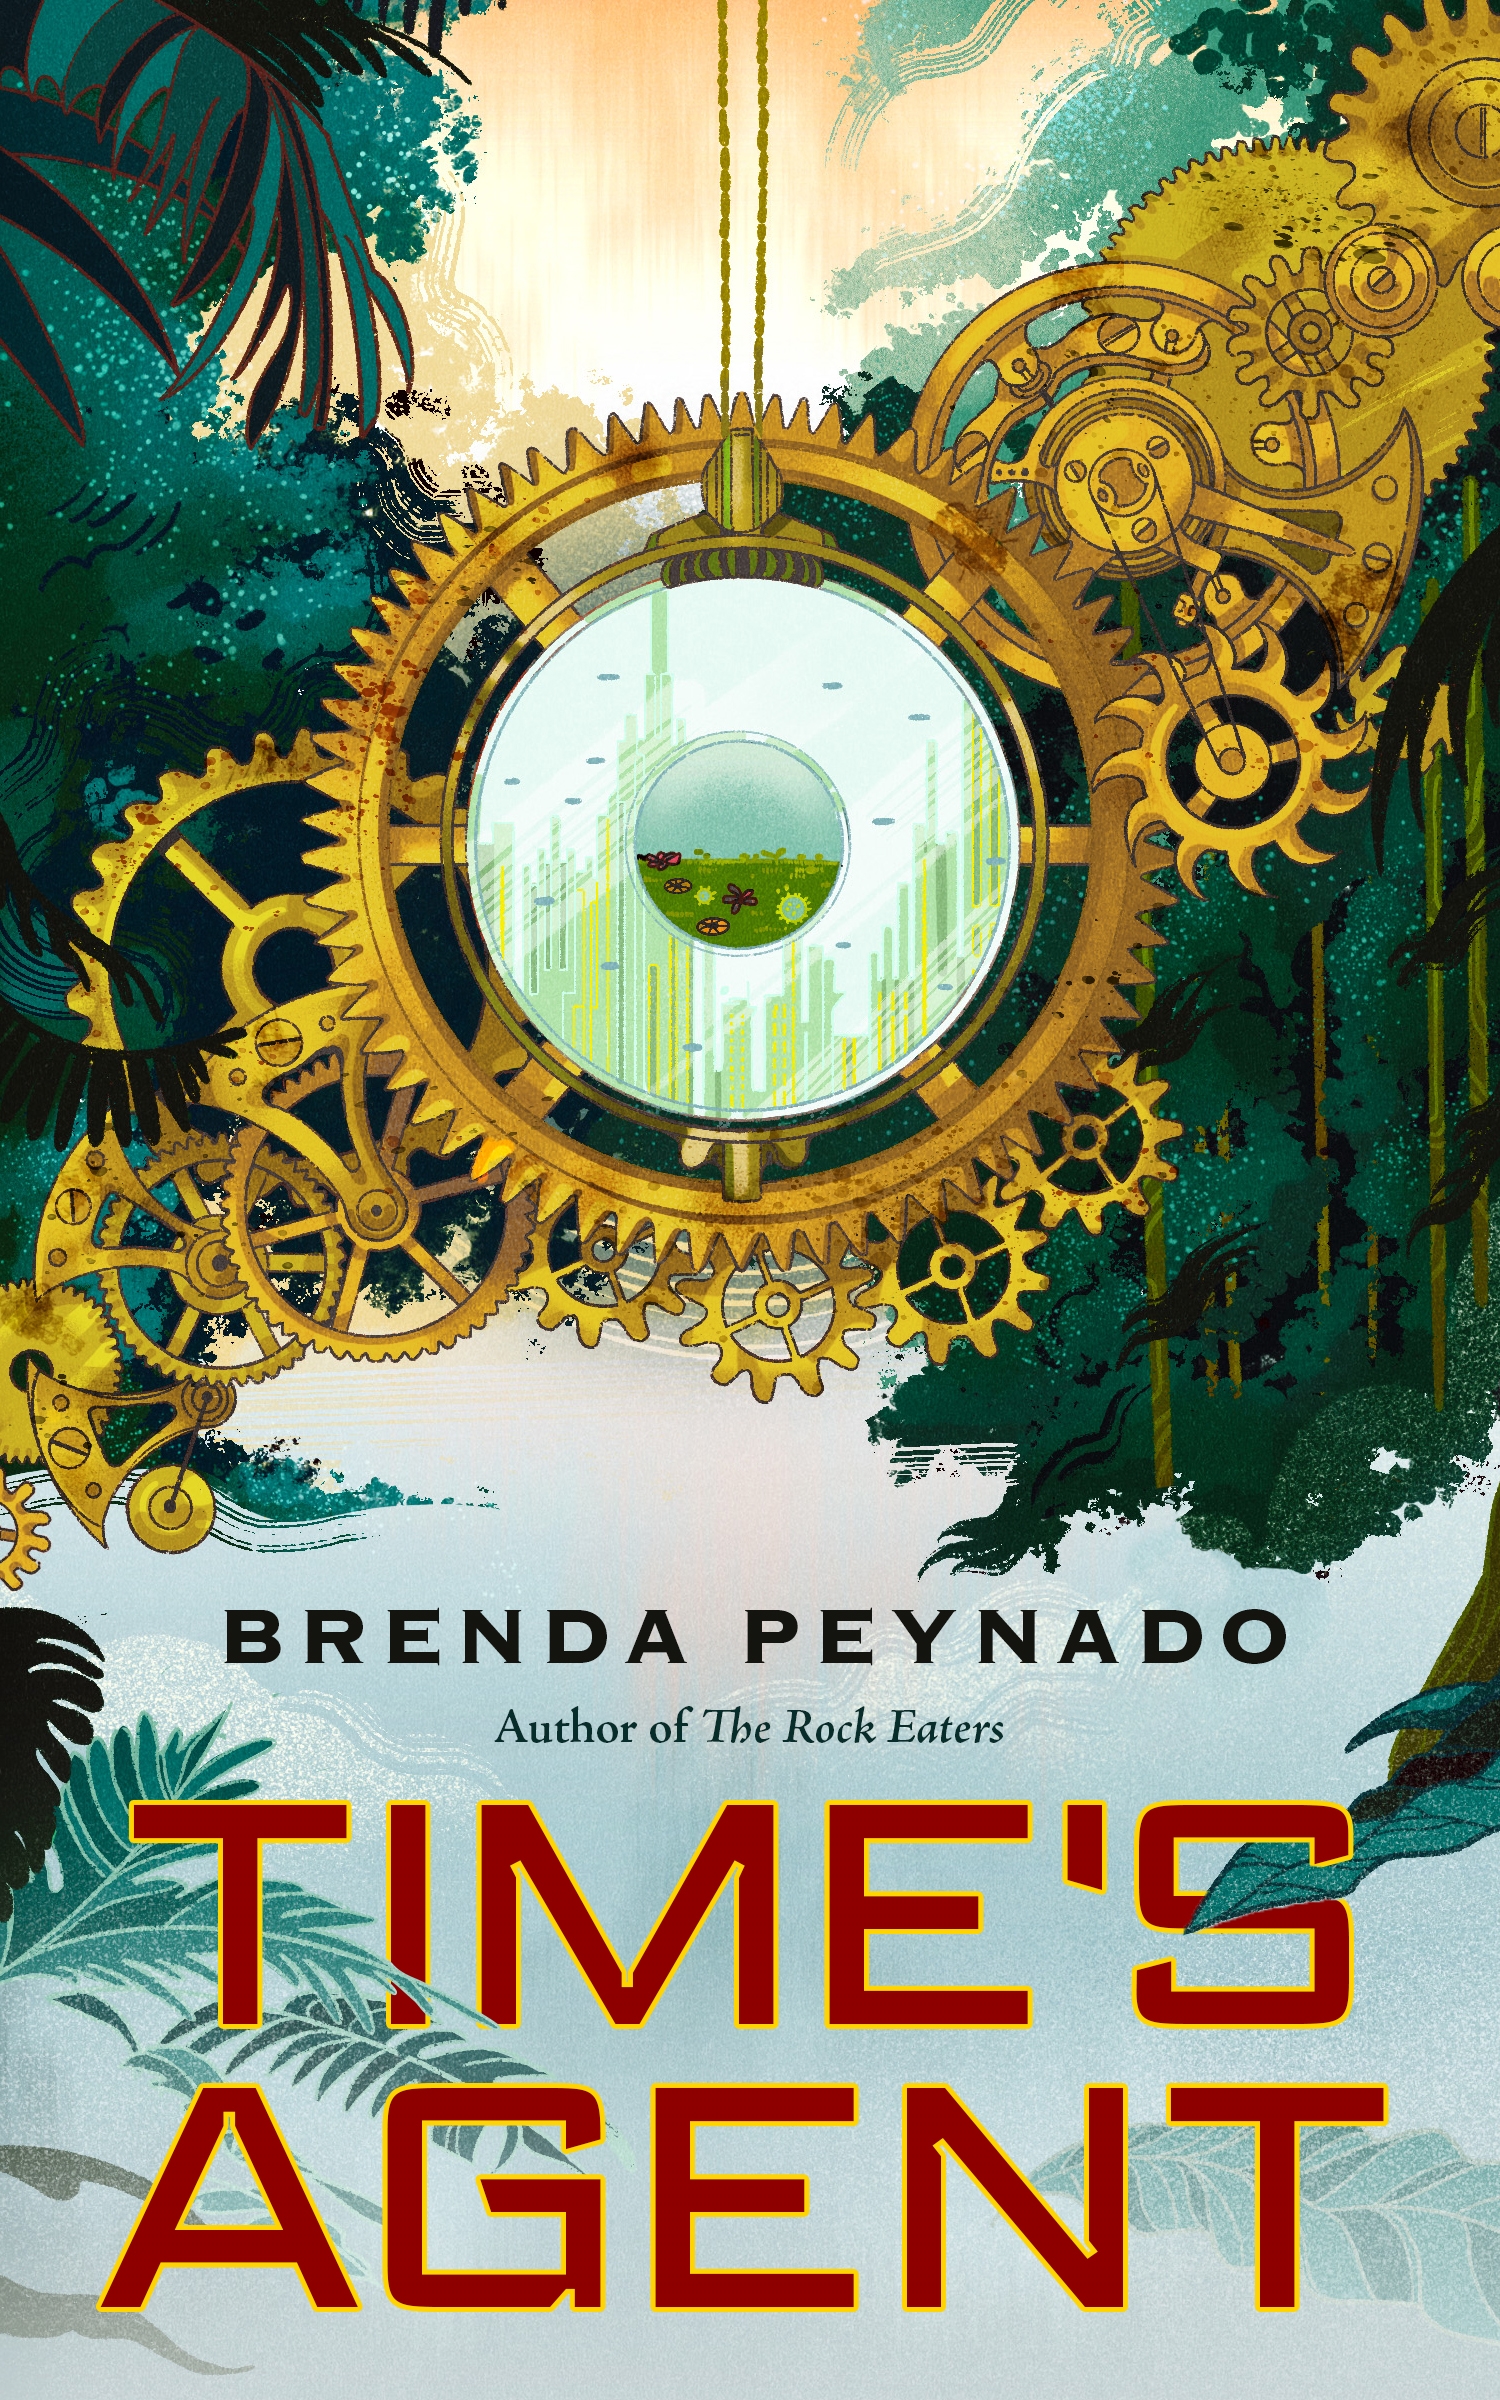 Time's Agent by Brenda Peynado